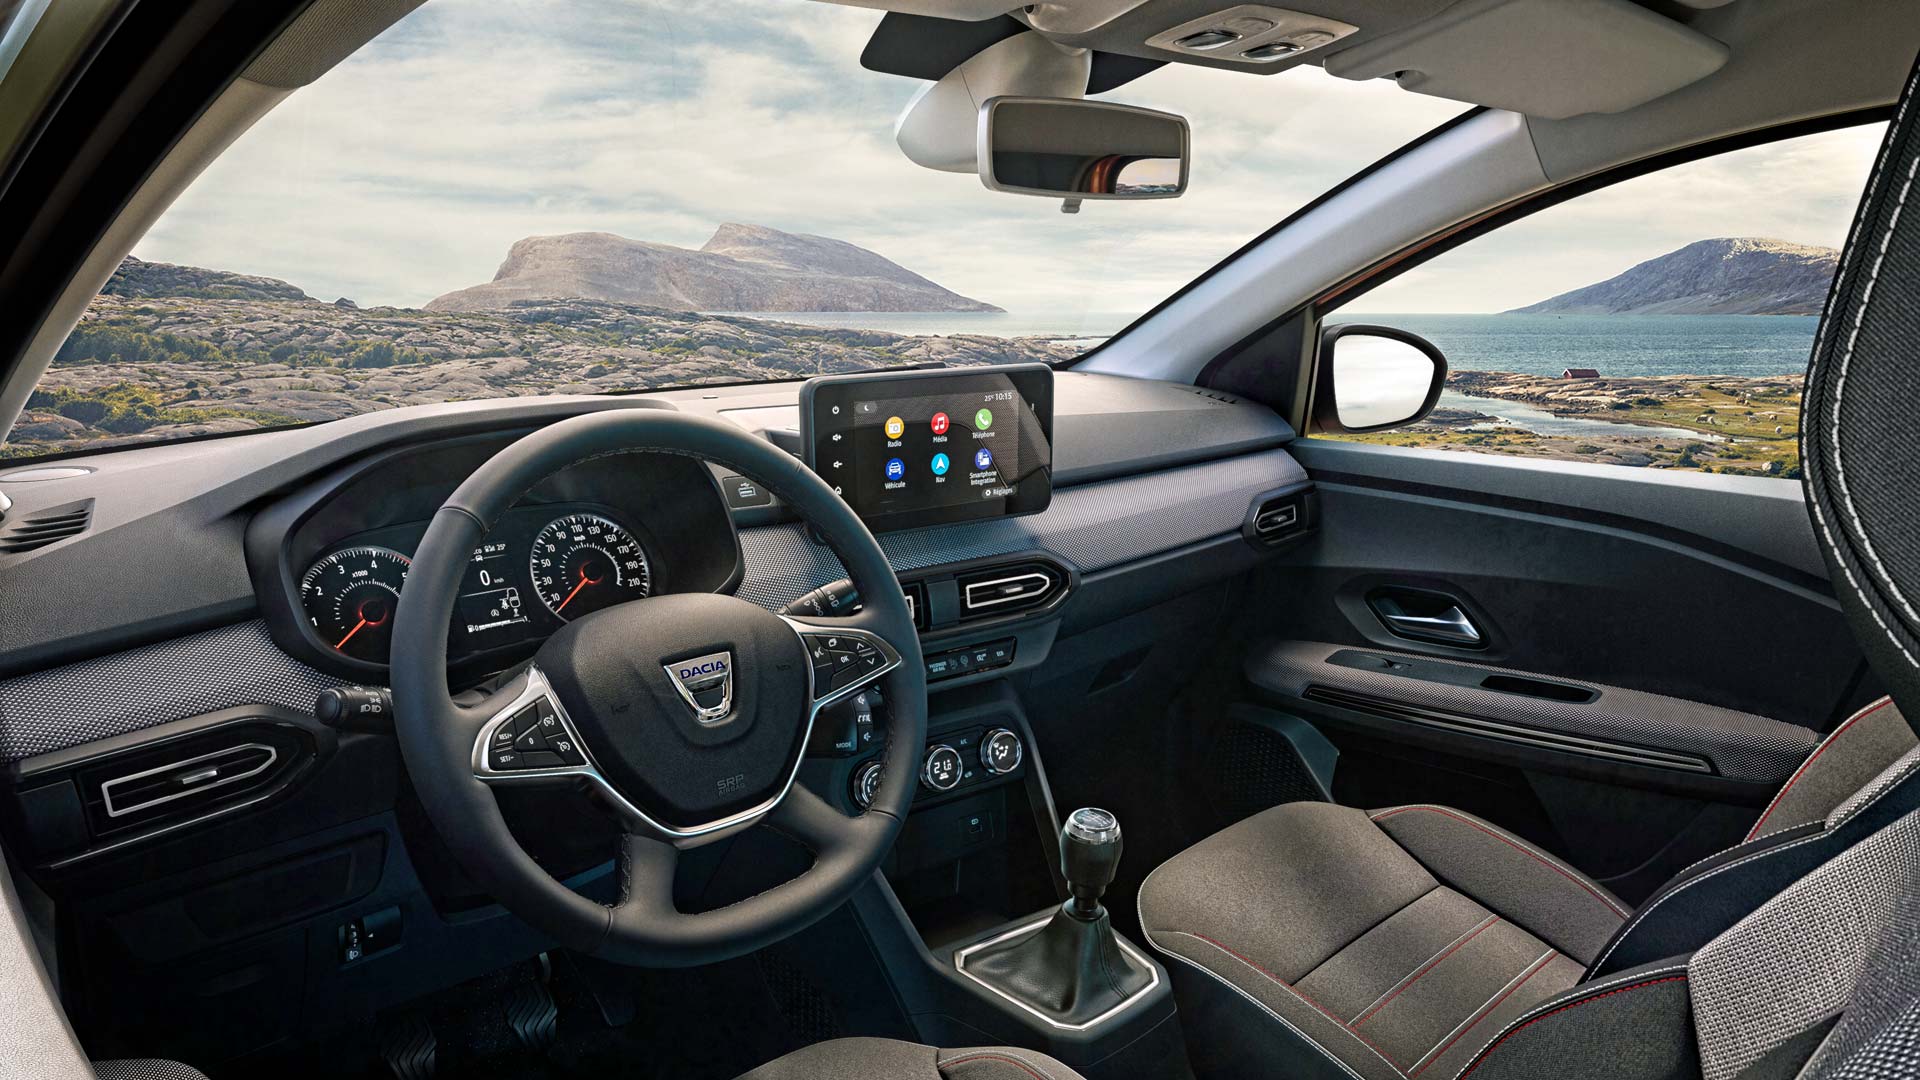 New Dacia Jogger budget sevenseater revealed in full